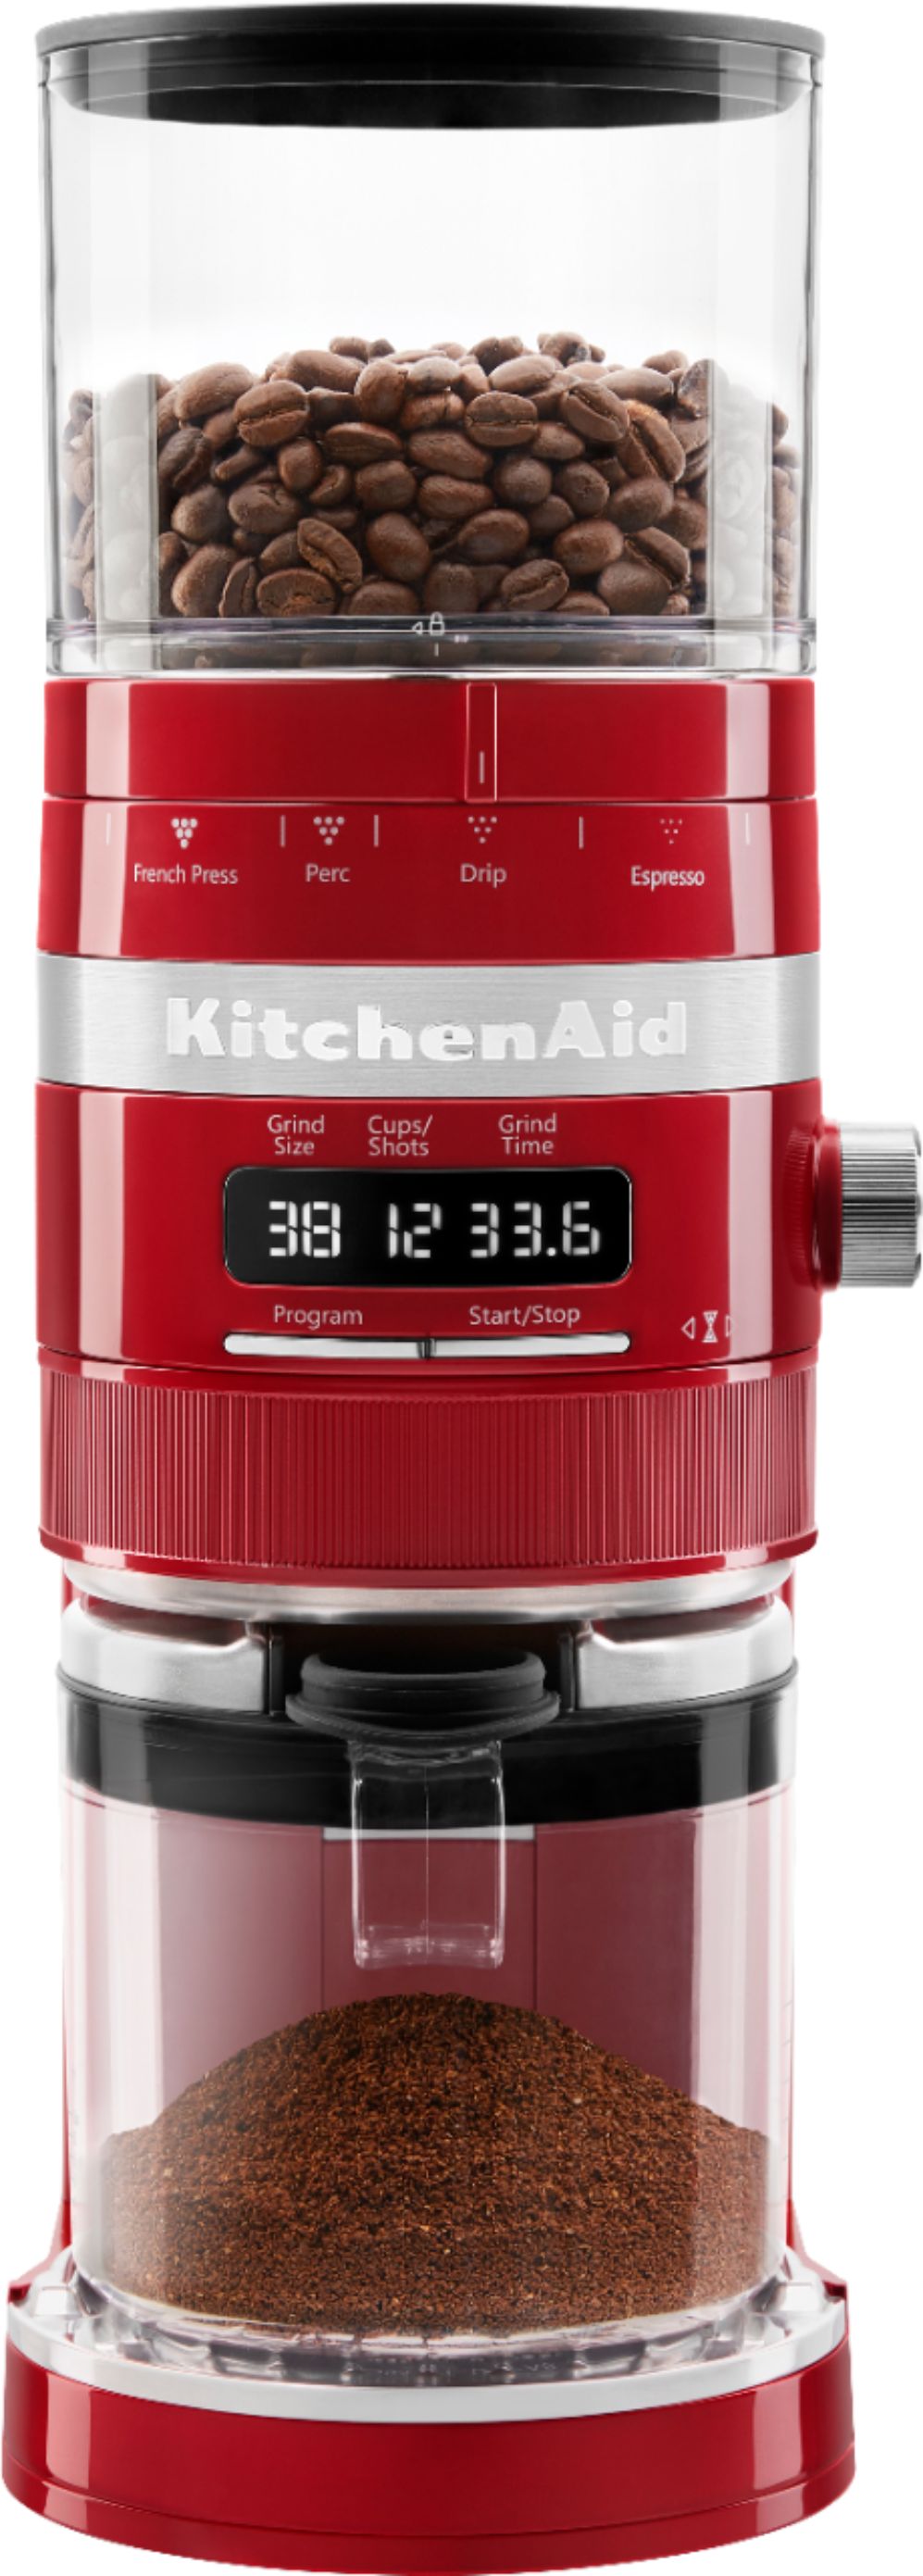 KitchenAid Burr Coffee Grinder - KCG8433 